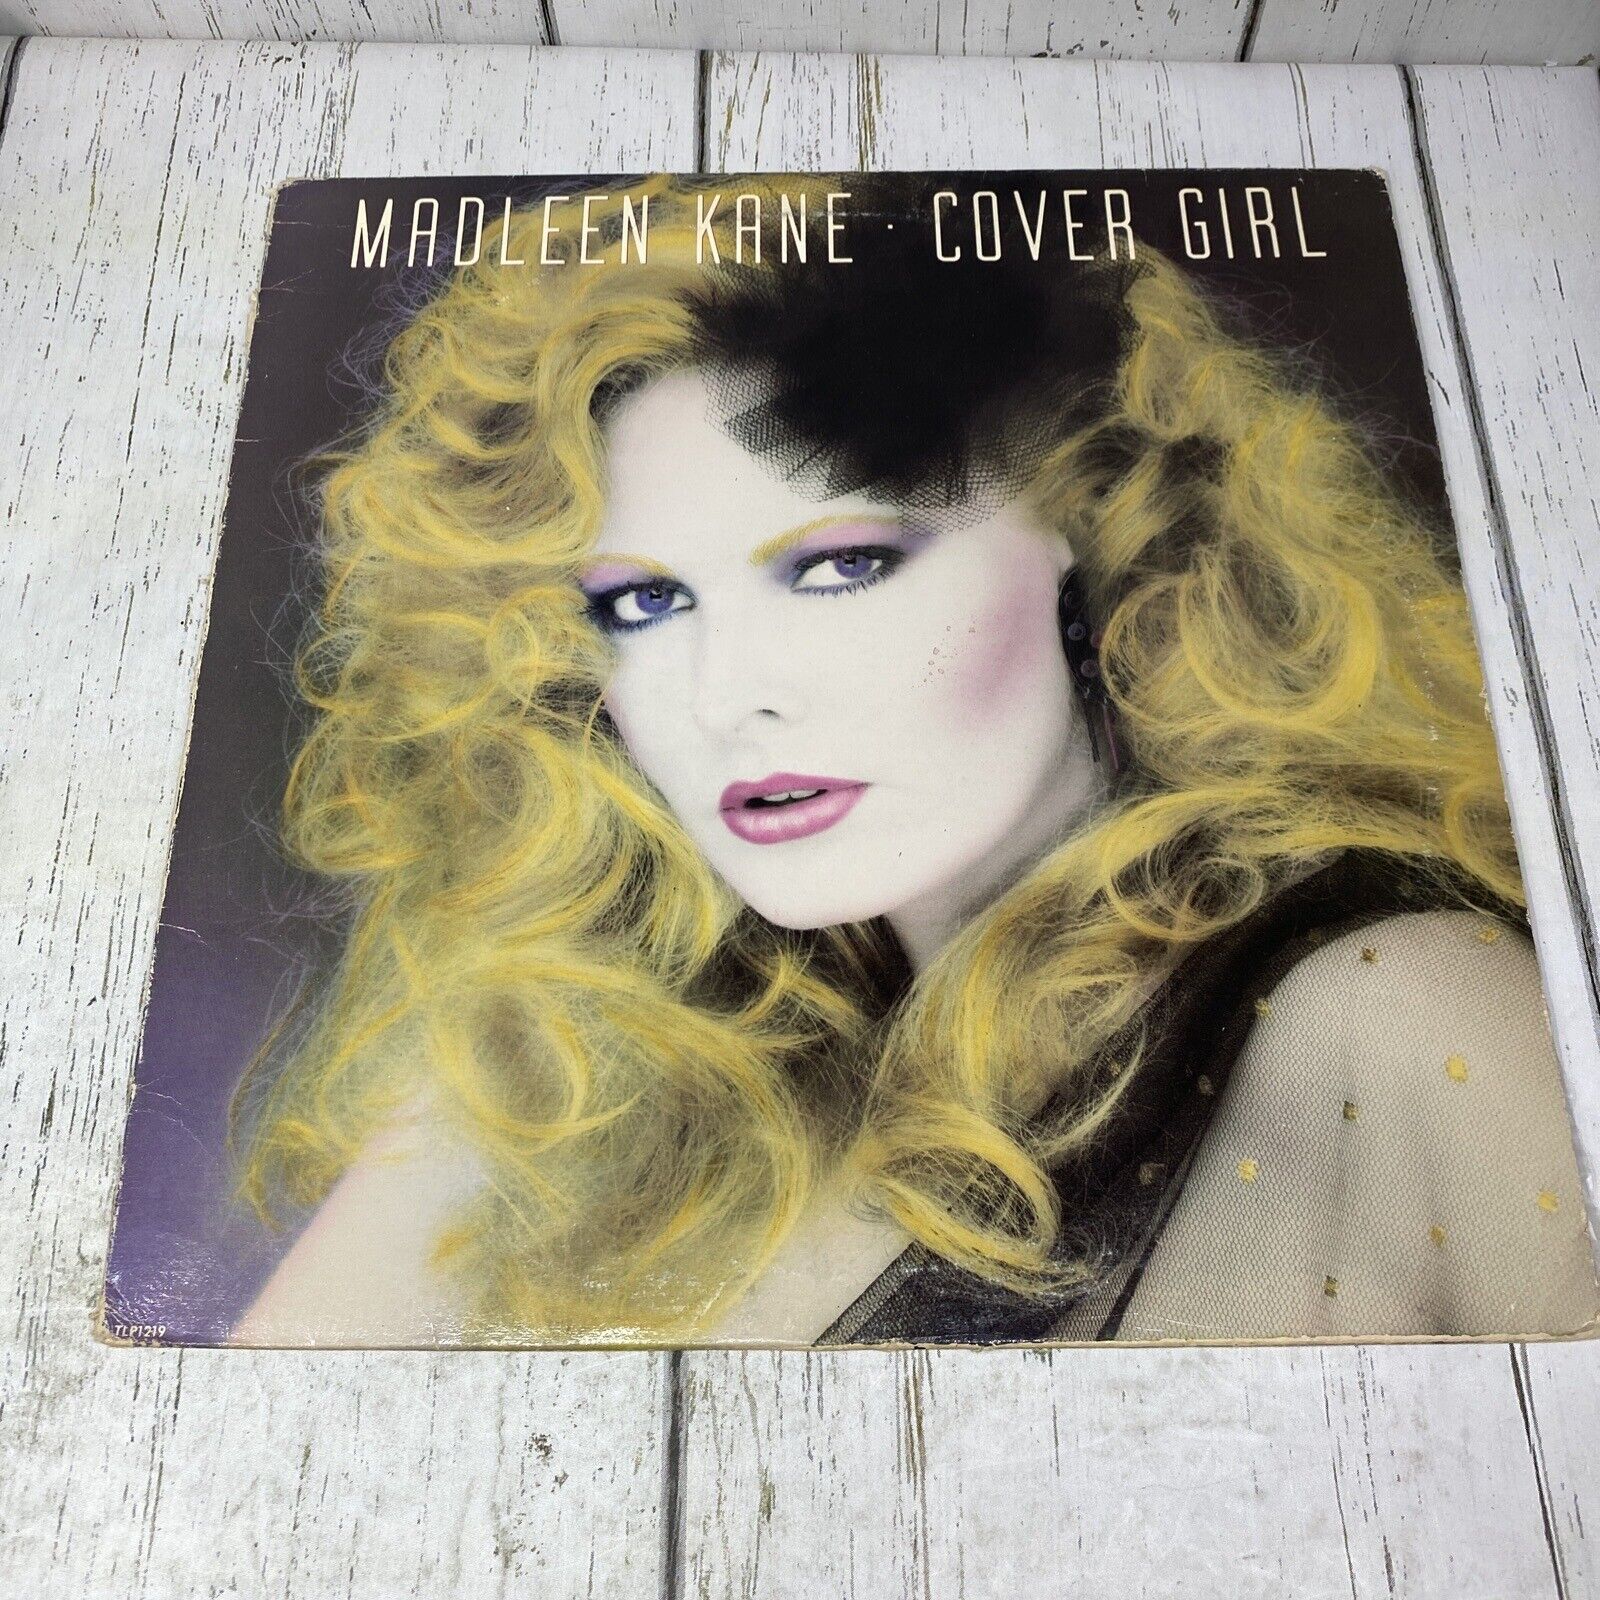 Madleen Kane - Cover Girl - 1985 Vinyl LP - Electronic Funk Disco